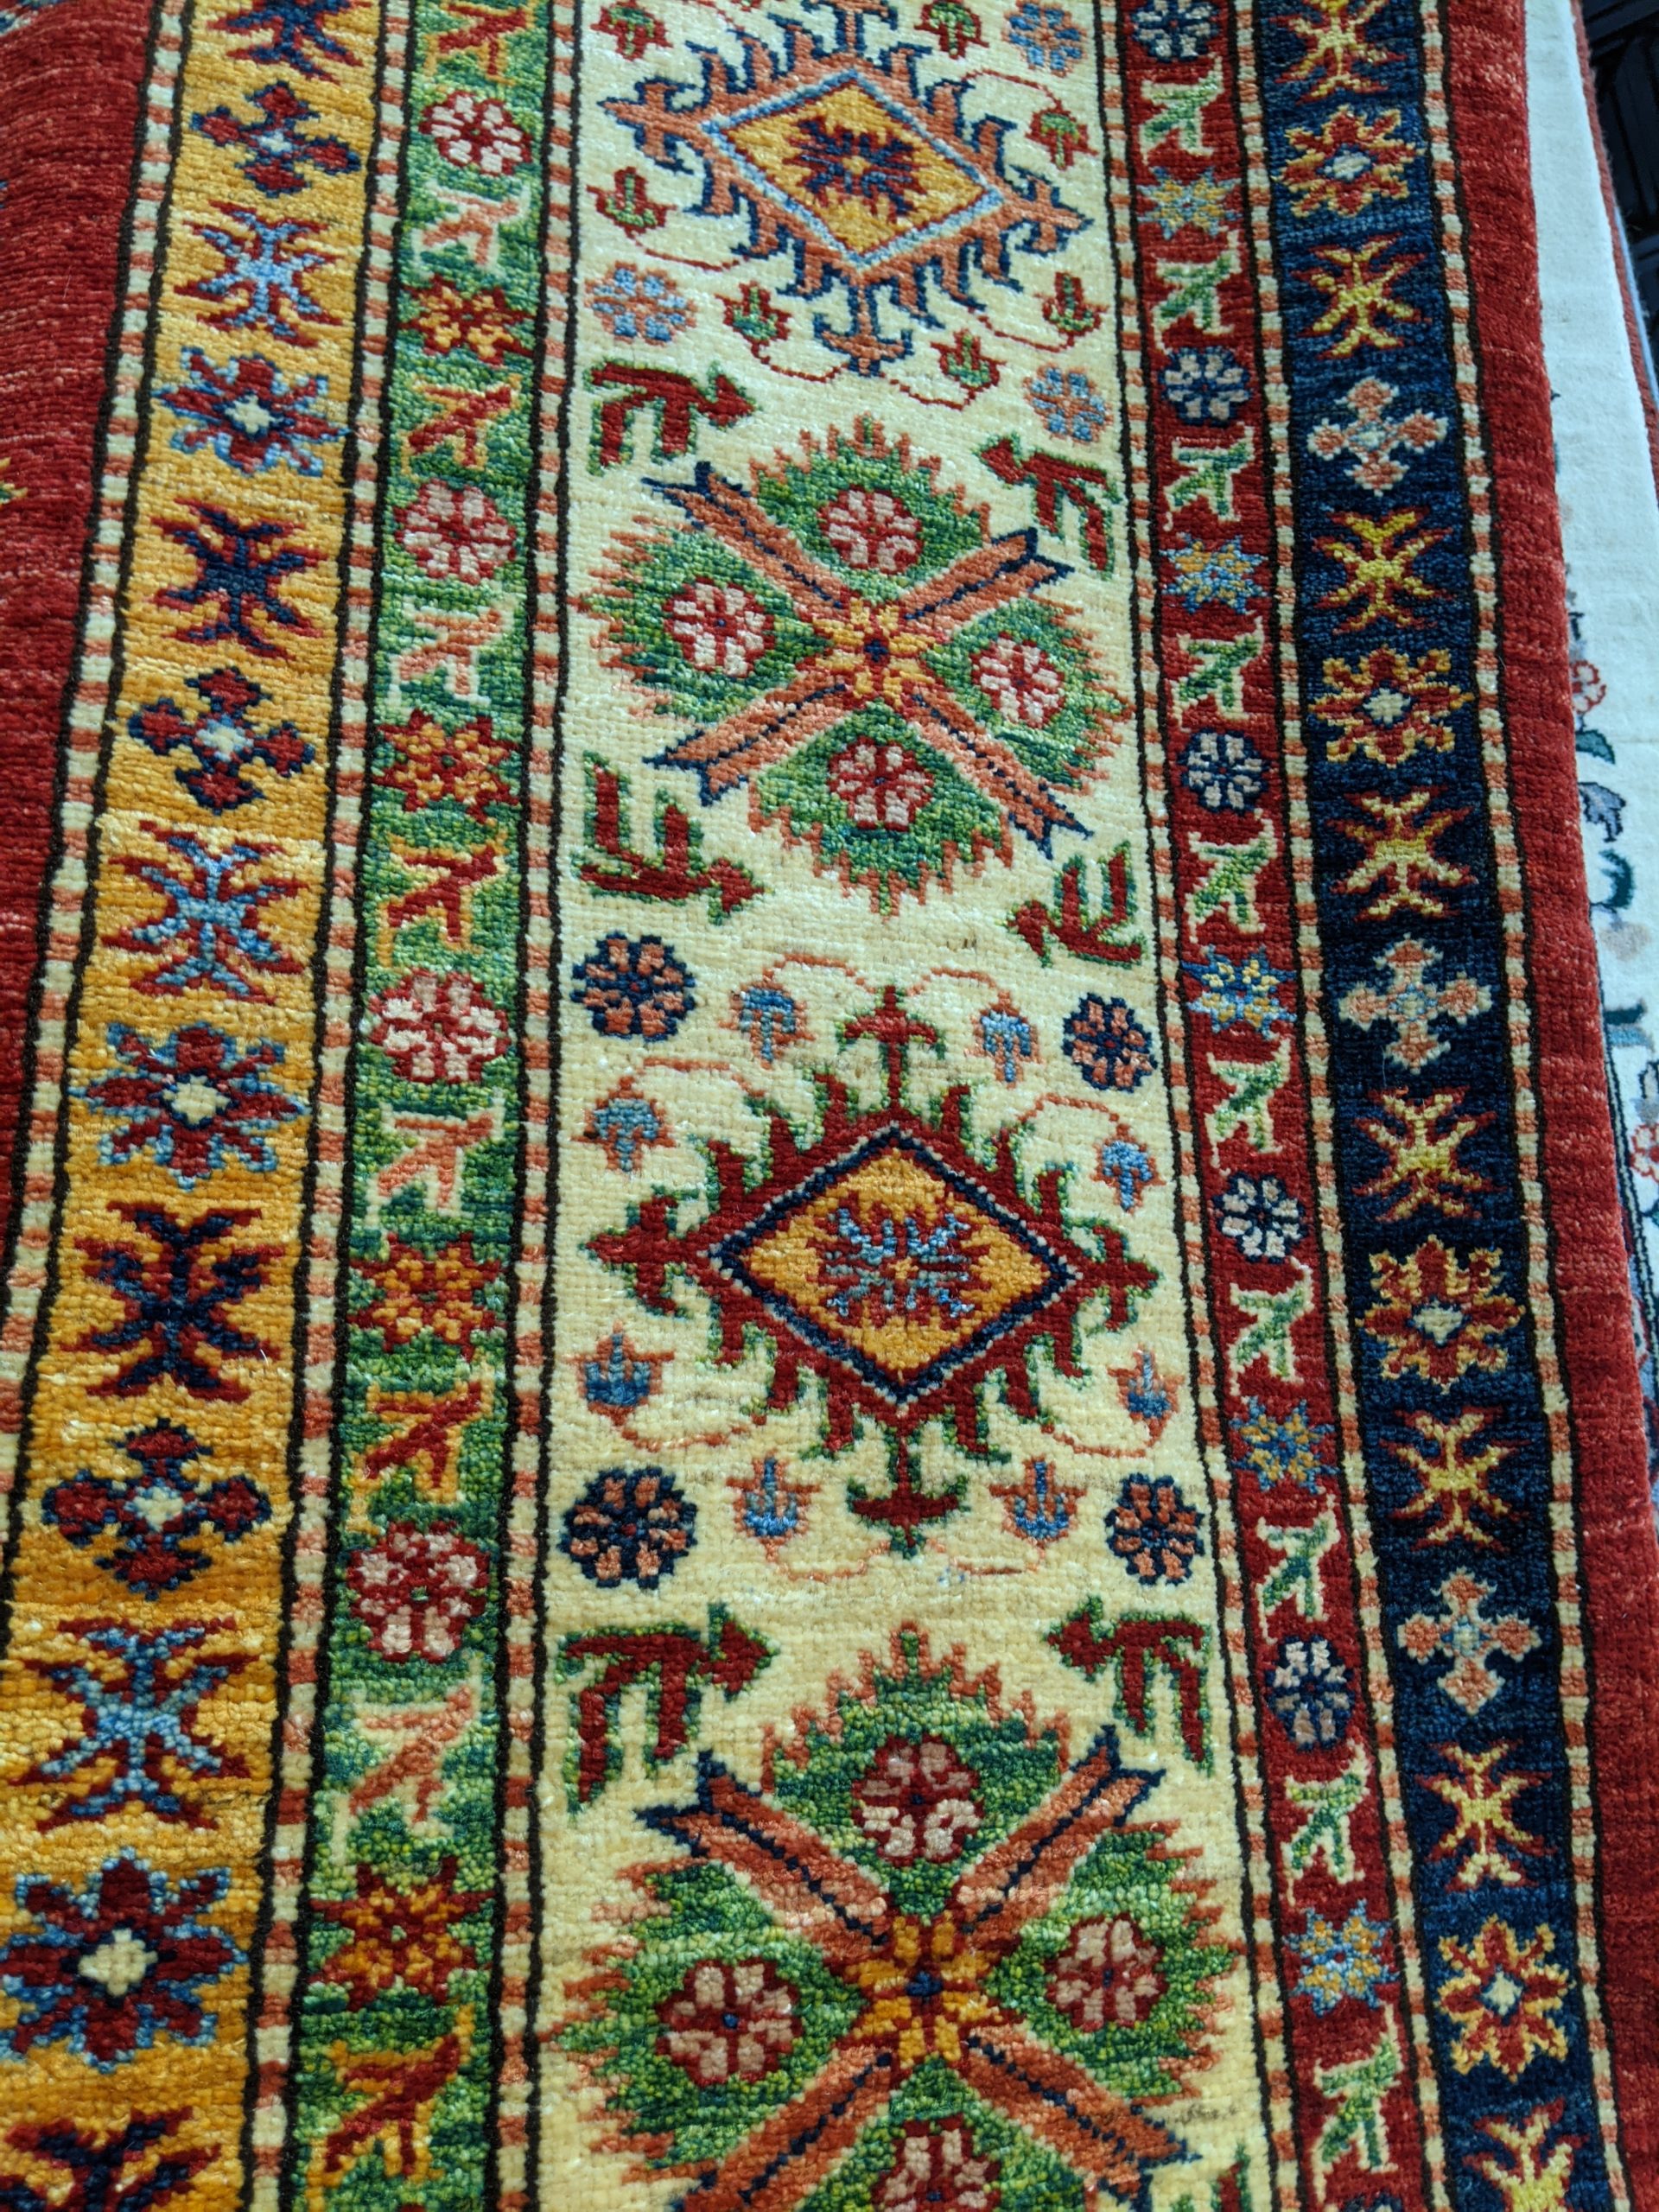 Kazak-Style Afghani Rug